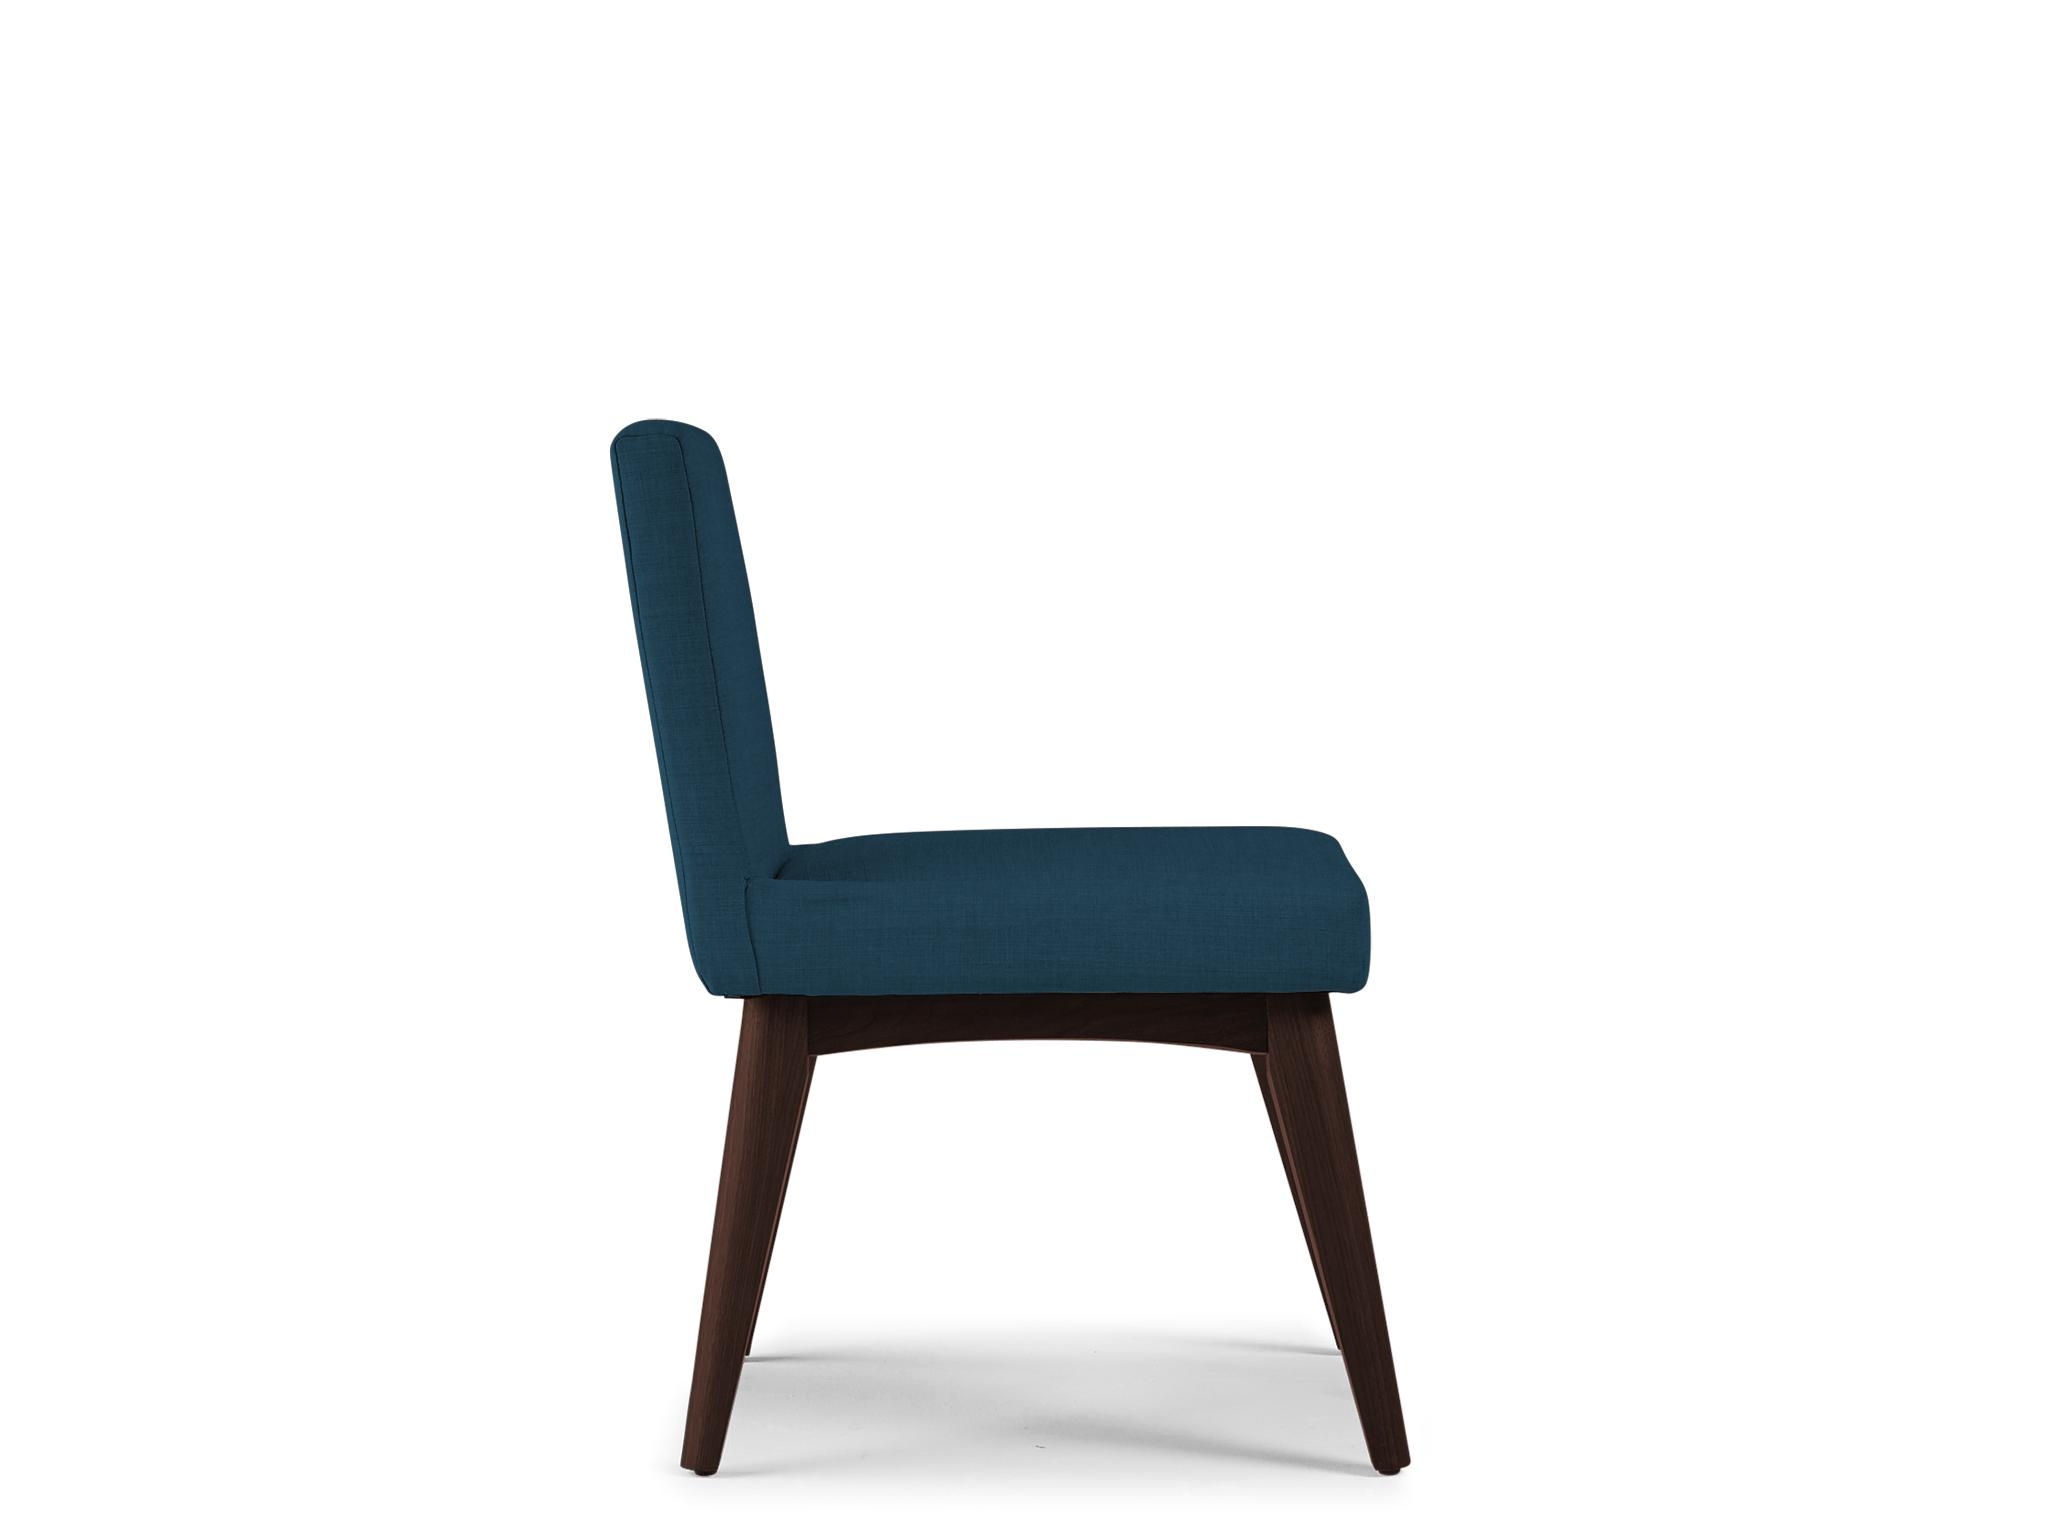 Blue Spencer Mid Century Modern Dining Chair - Key Largo Zenith Teal - Walnut - Image 2